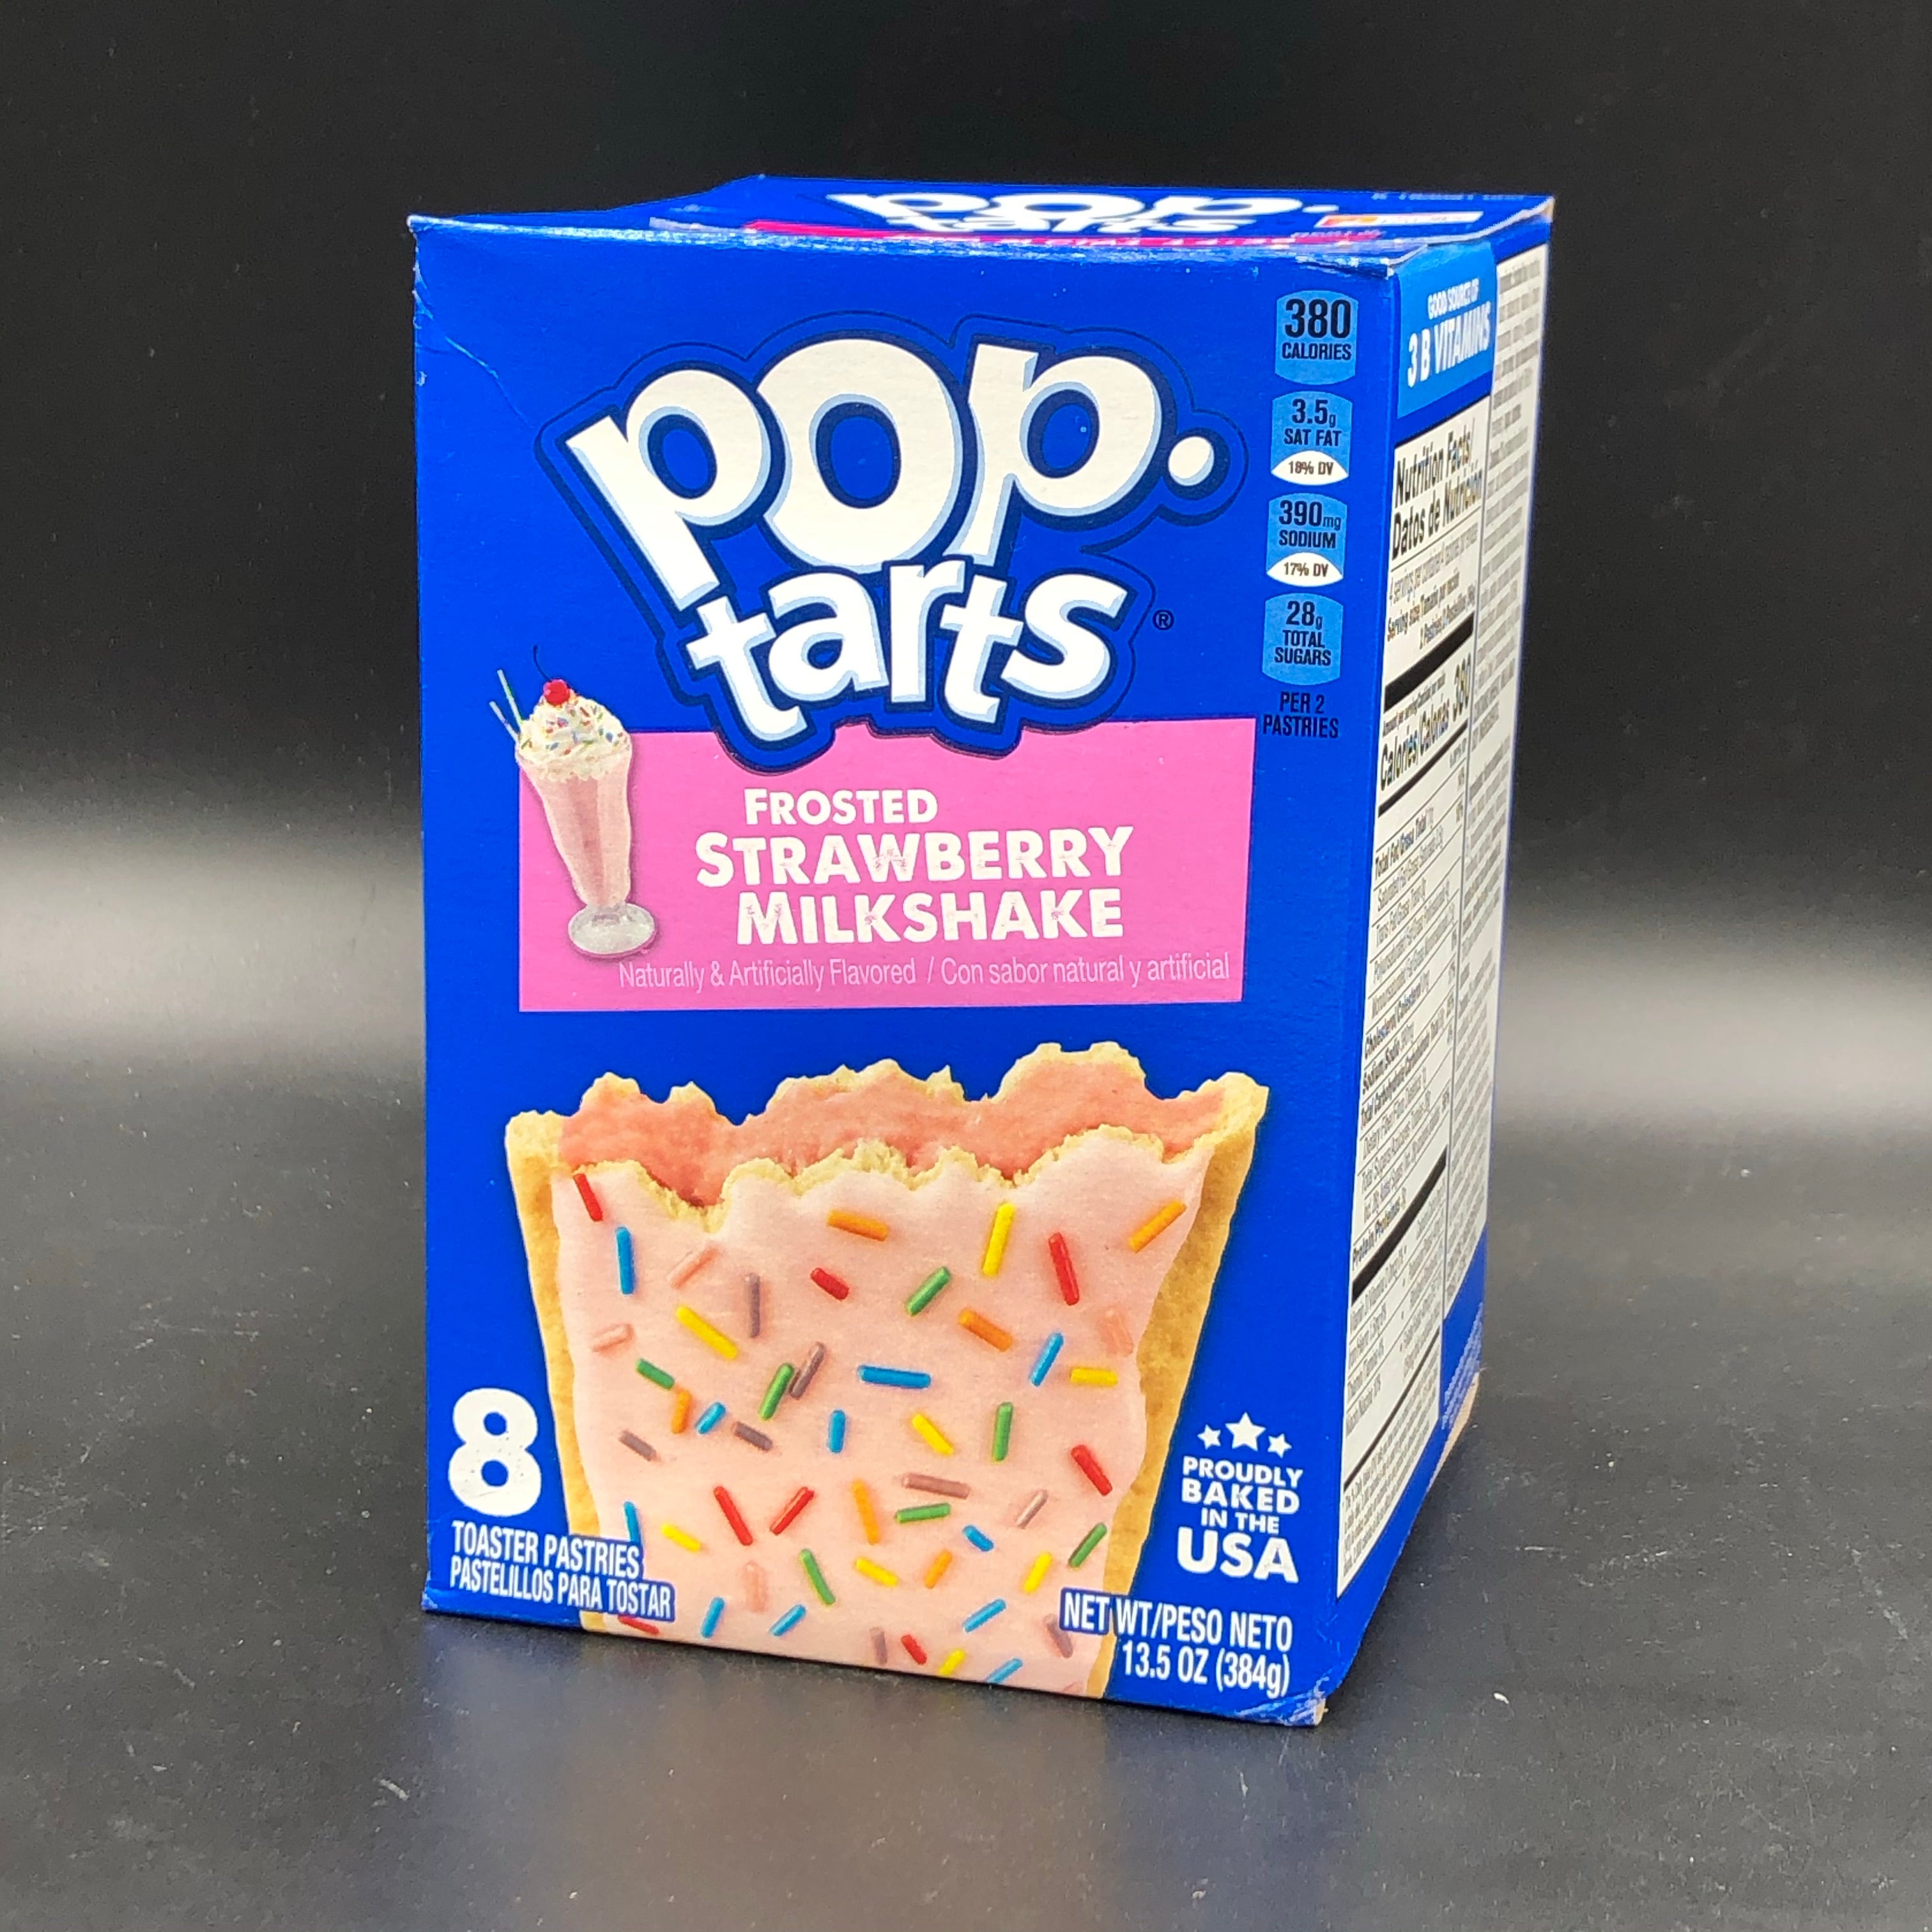 Pop Tarts Frosted Strawberry Milkshake 8Pack 384g (USA)